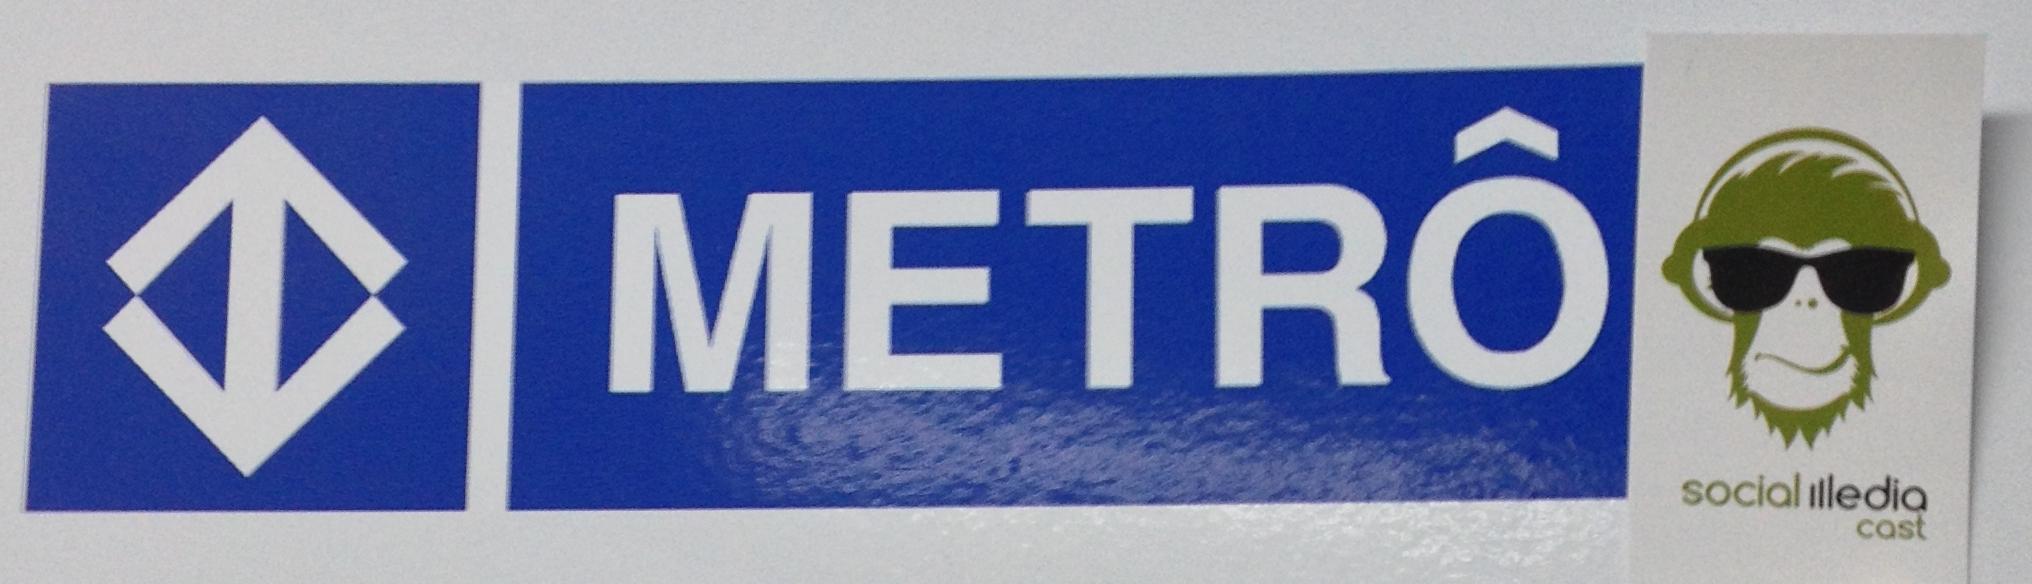 MetroSP3